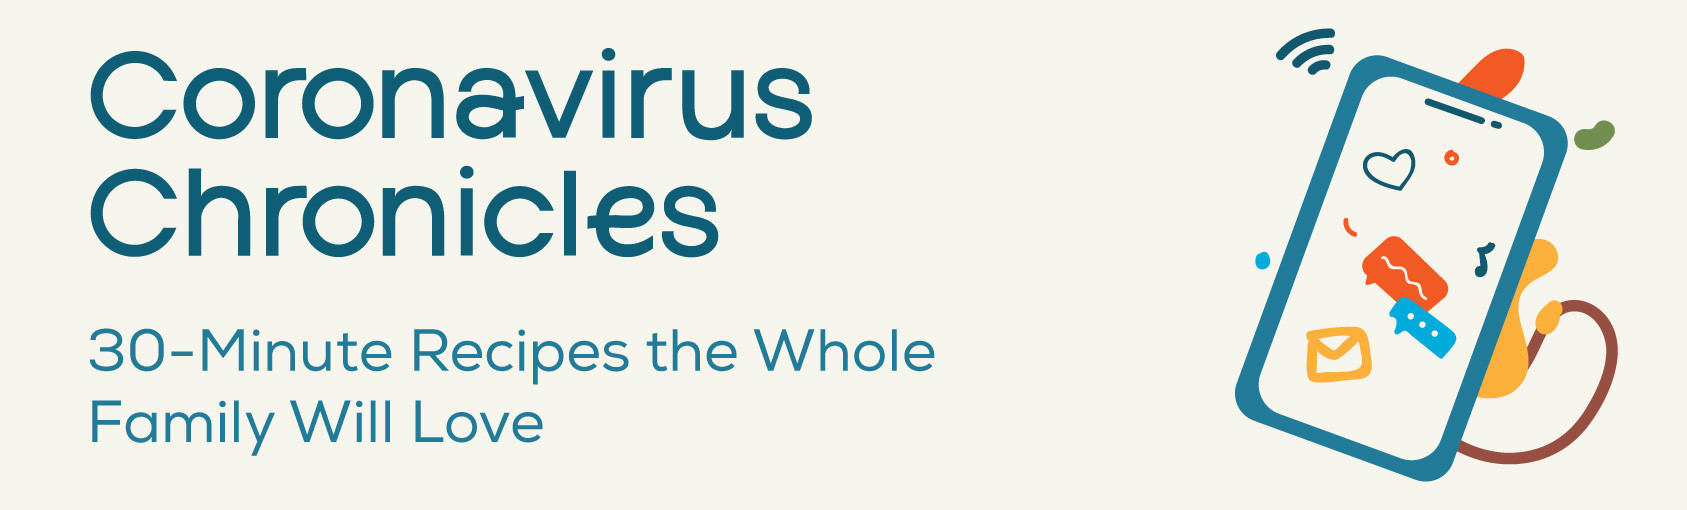 Coronavirus Chronicles: 30 Minute Recipes the Whole Family Will Love banner